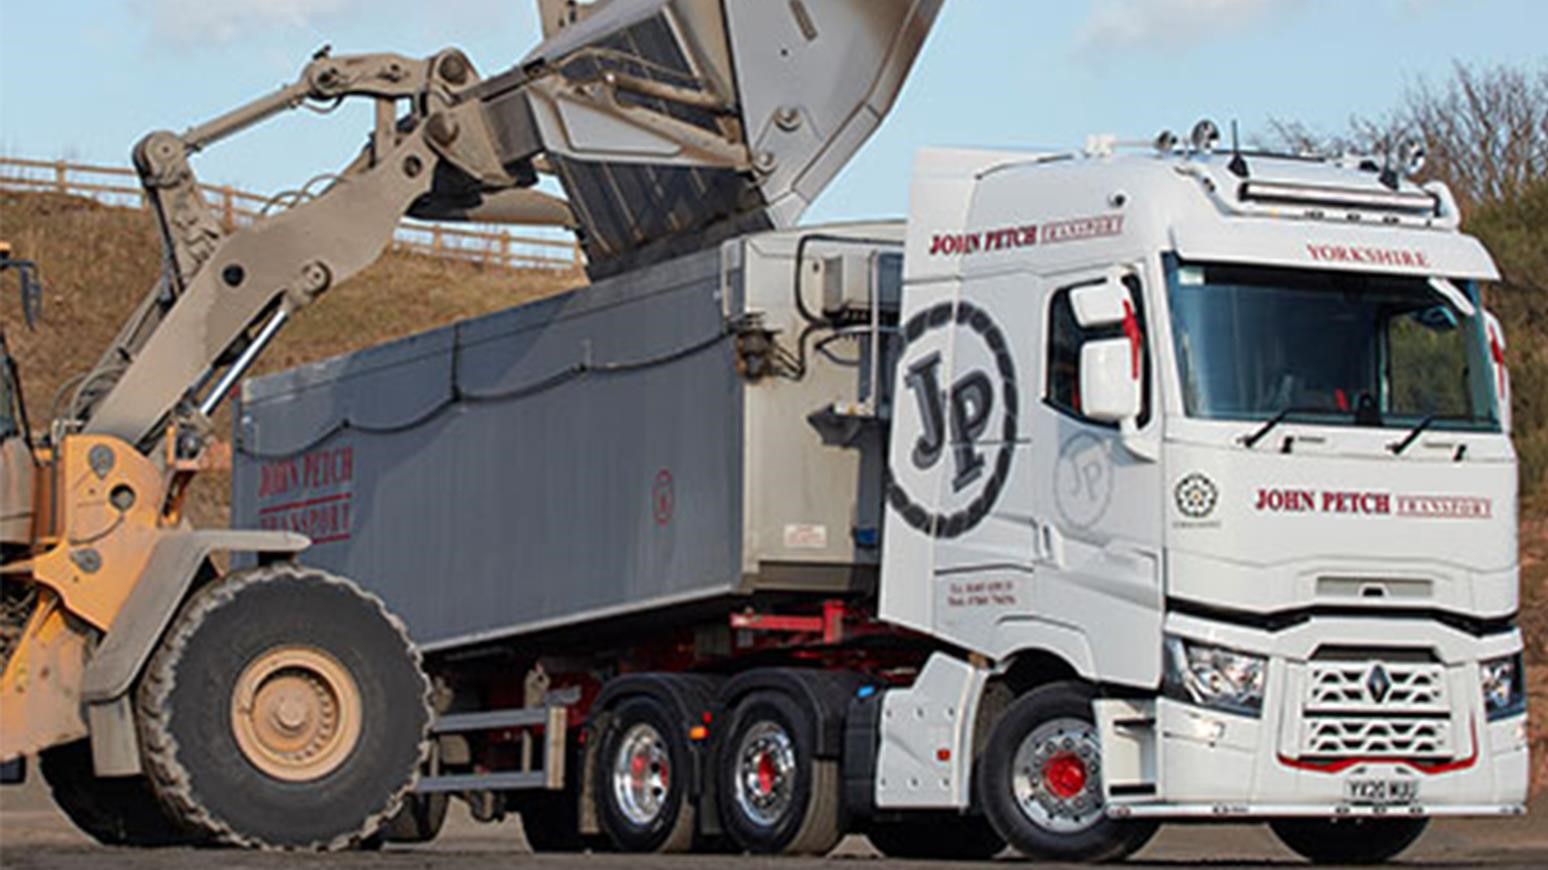 Renault Trucks’ T520 High Joins John Petch Transport’s Fleet Via Conquest Deal